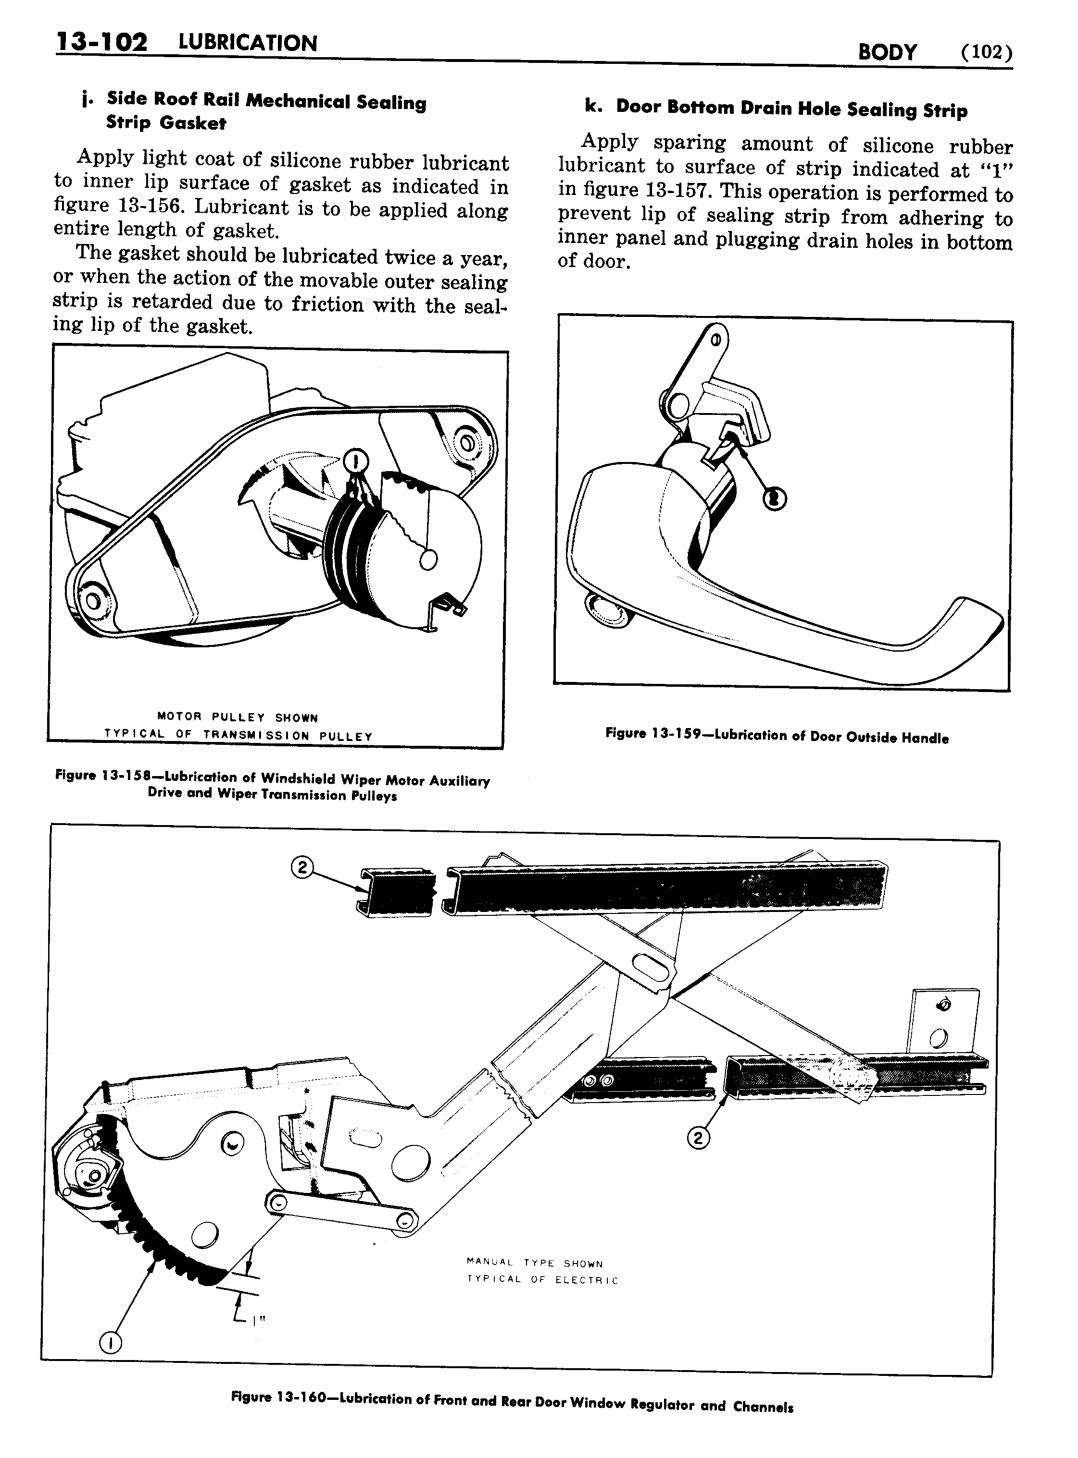 n_1957 Buick Body Service Manual-104-104.jpg